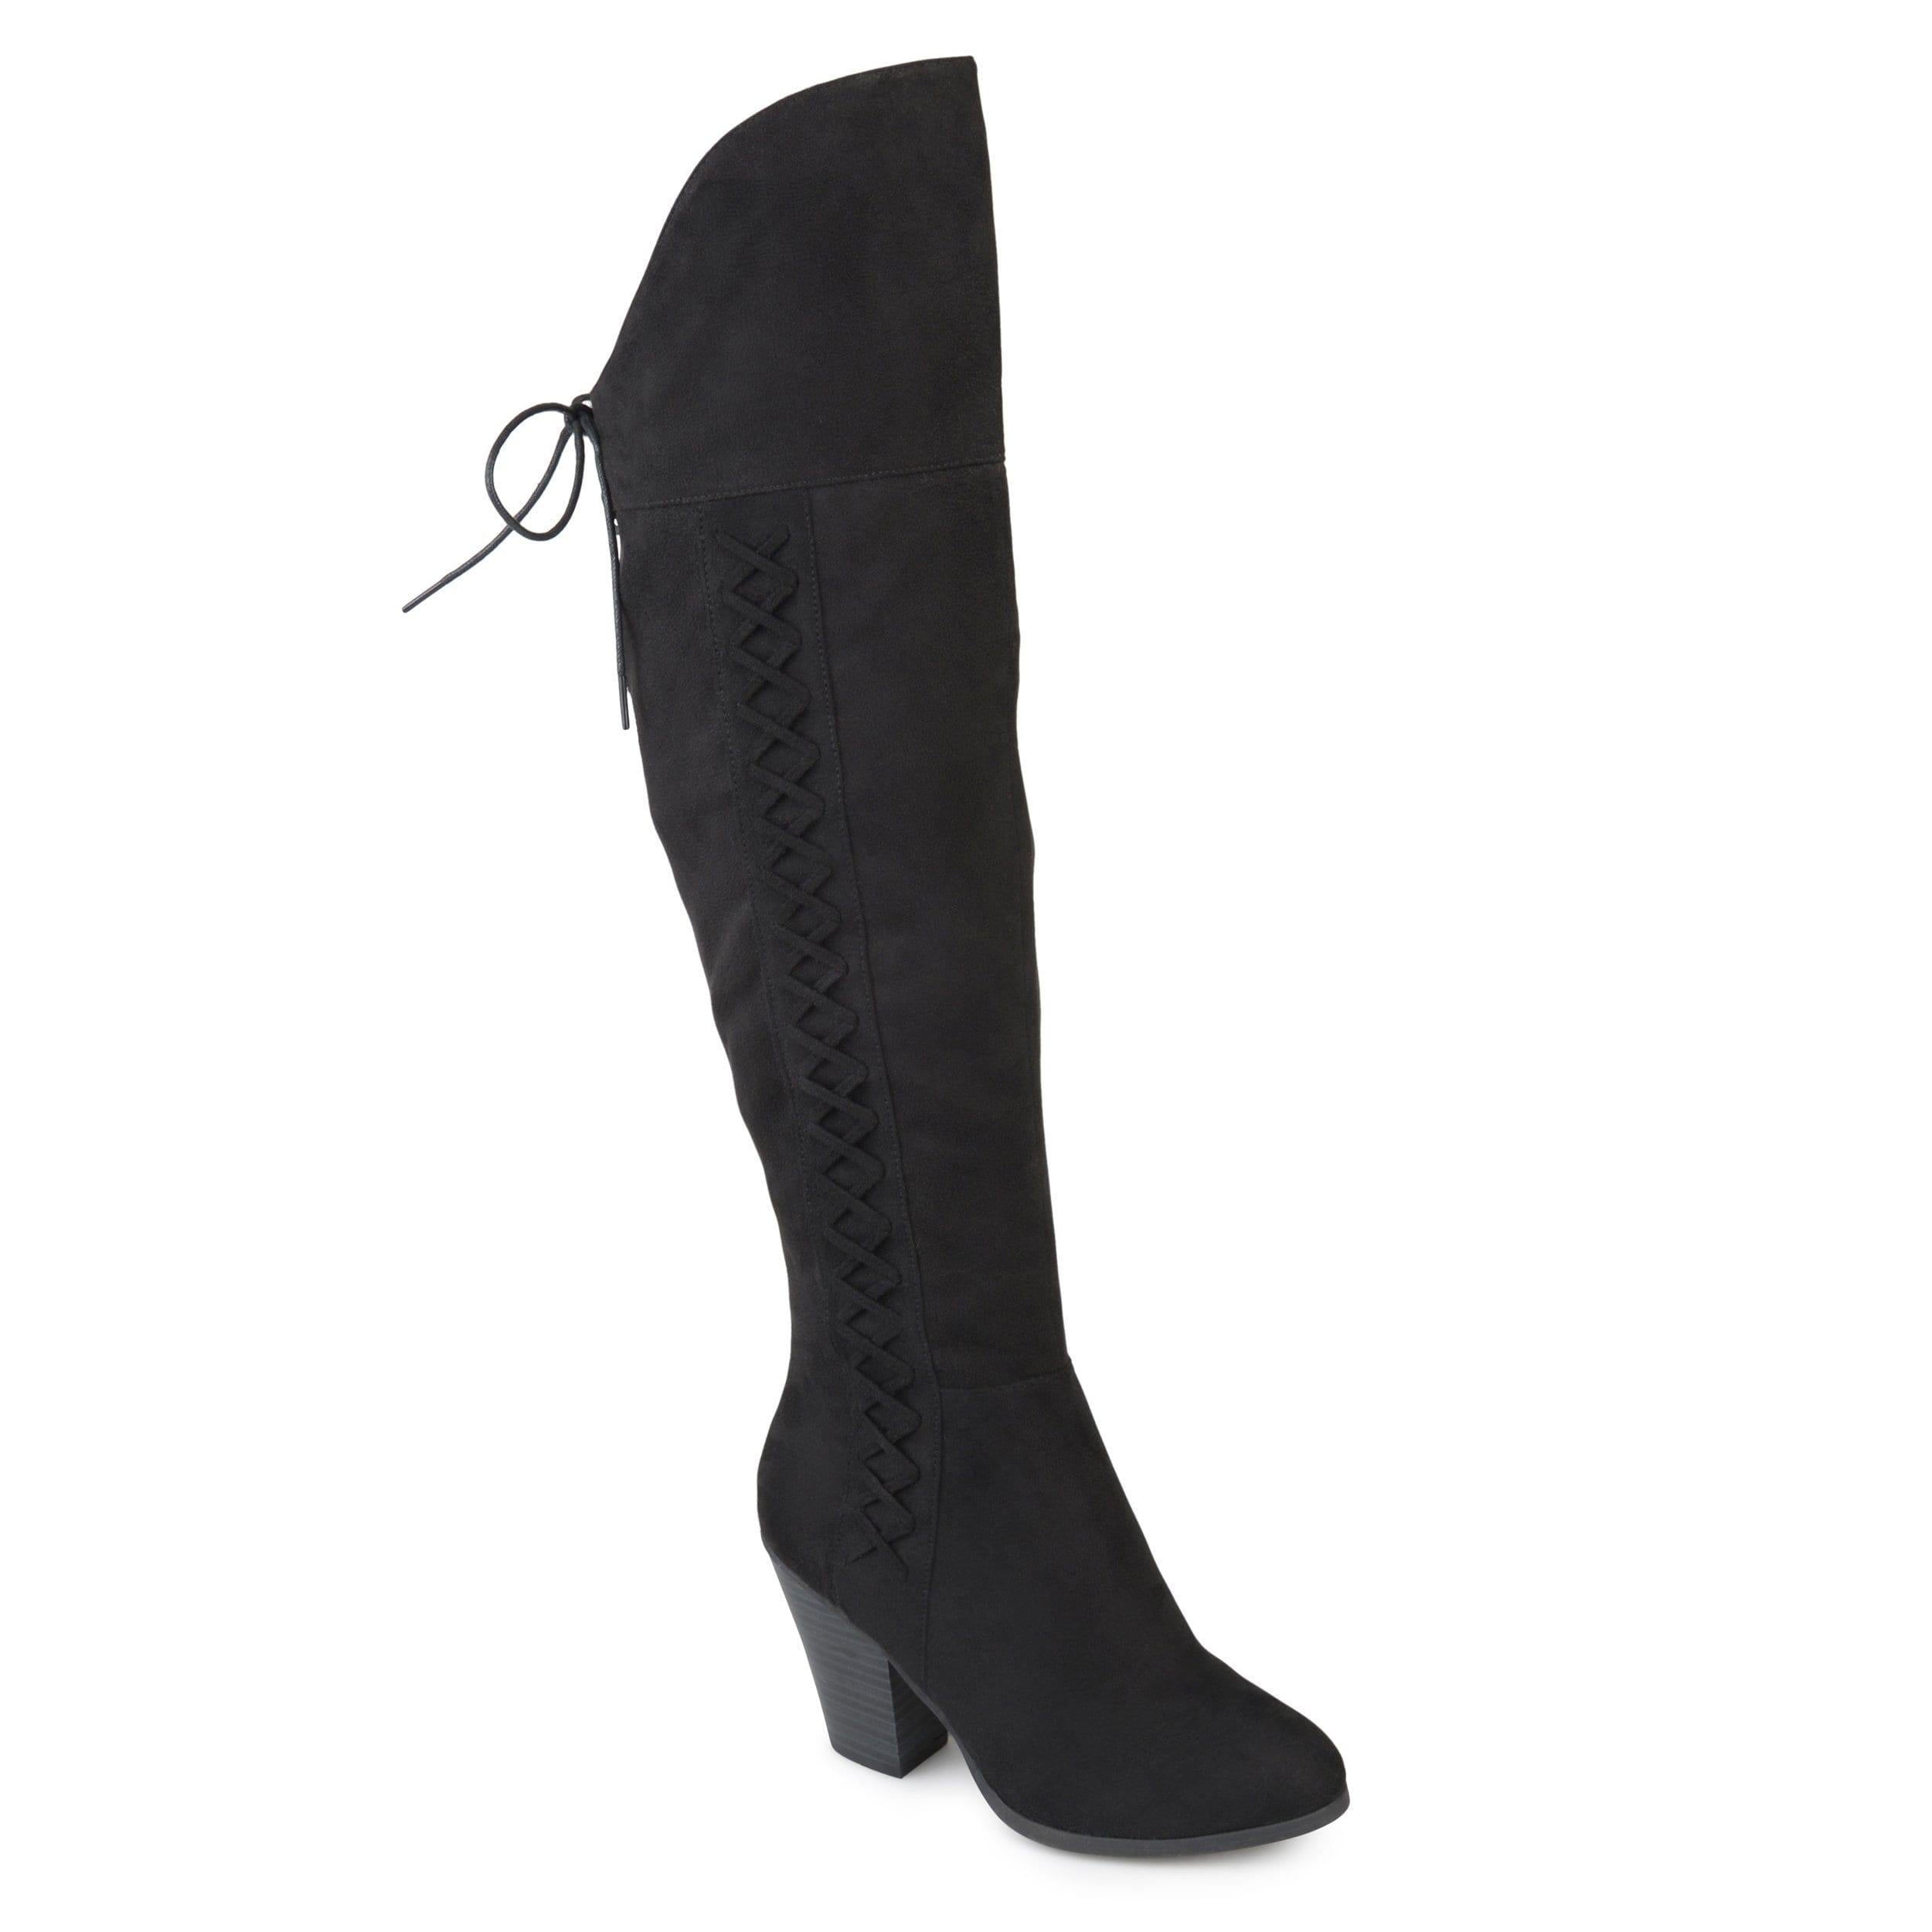 Spritz-S Boot | Women's Over-The-Knee Boots | Journee Collection